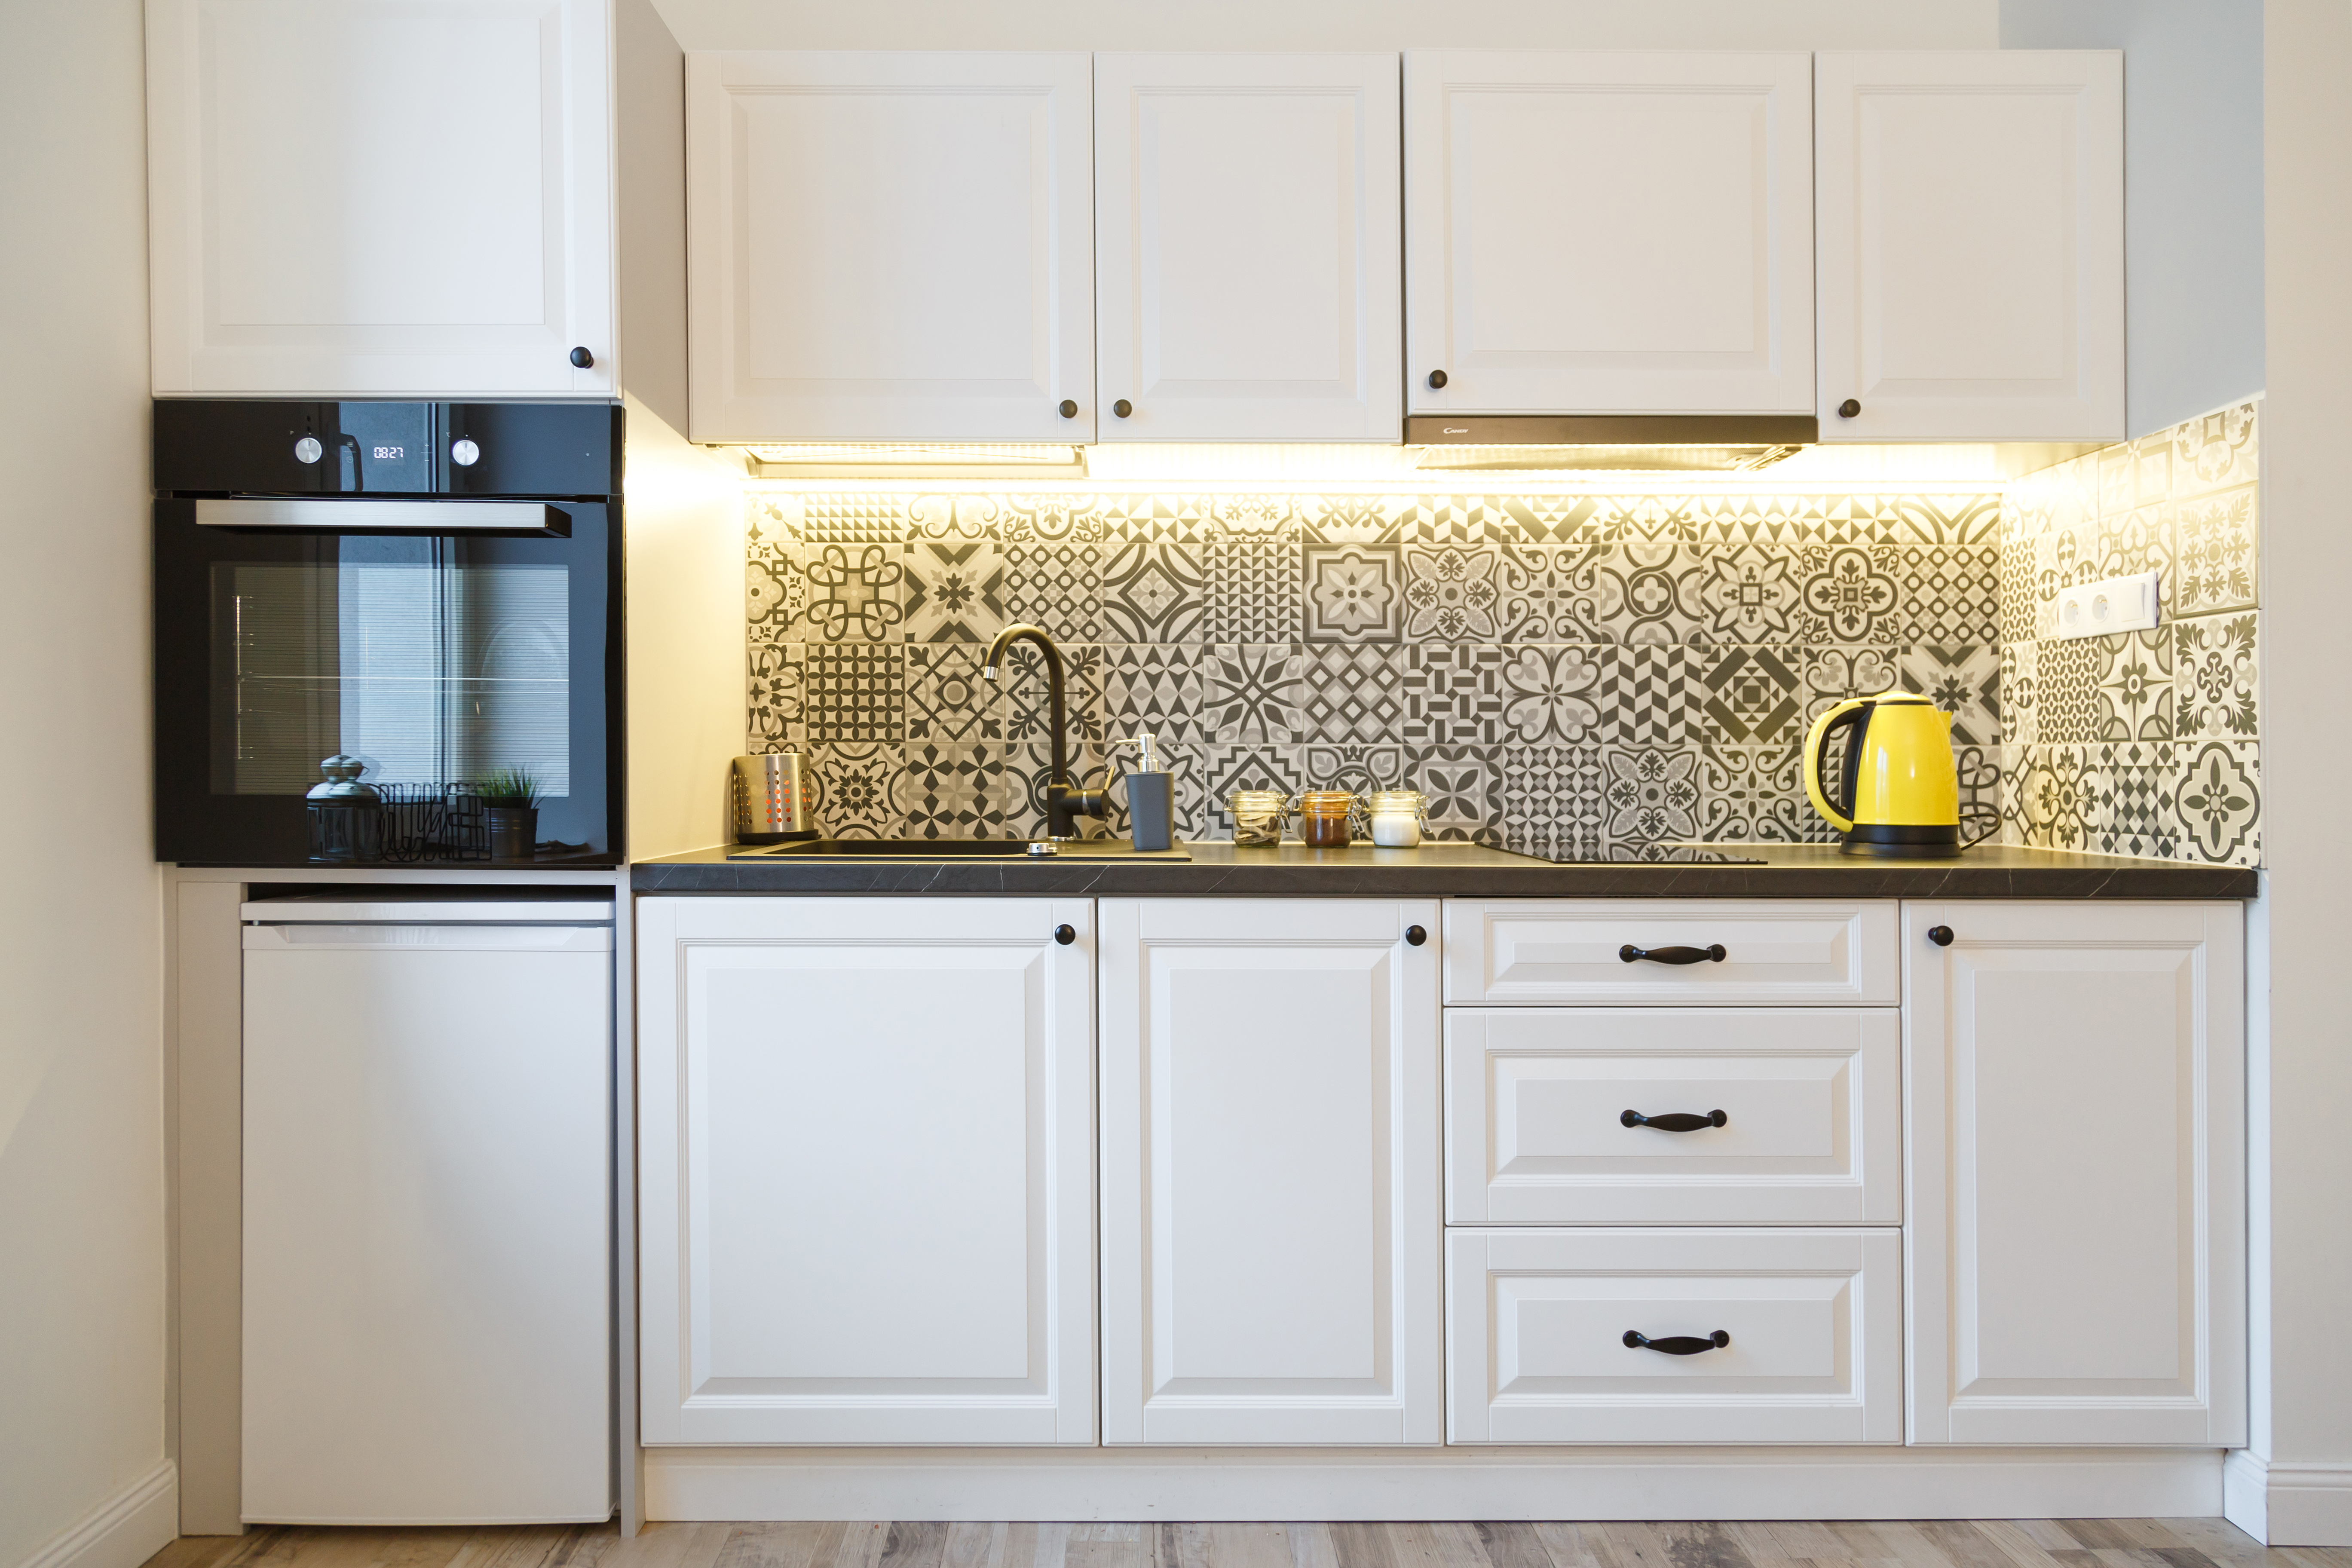 4. Install under cabinet lighting to brighten up your countertops.